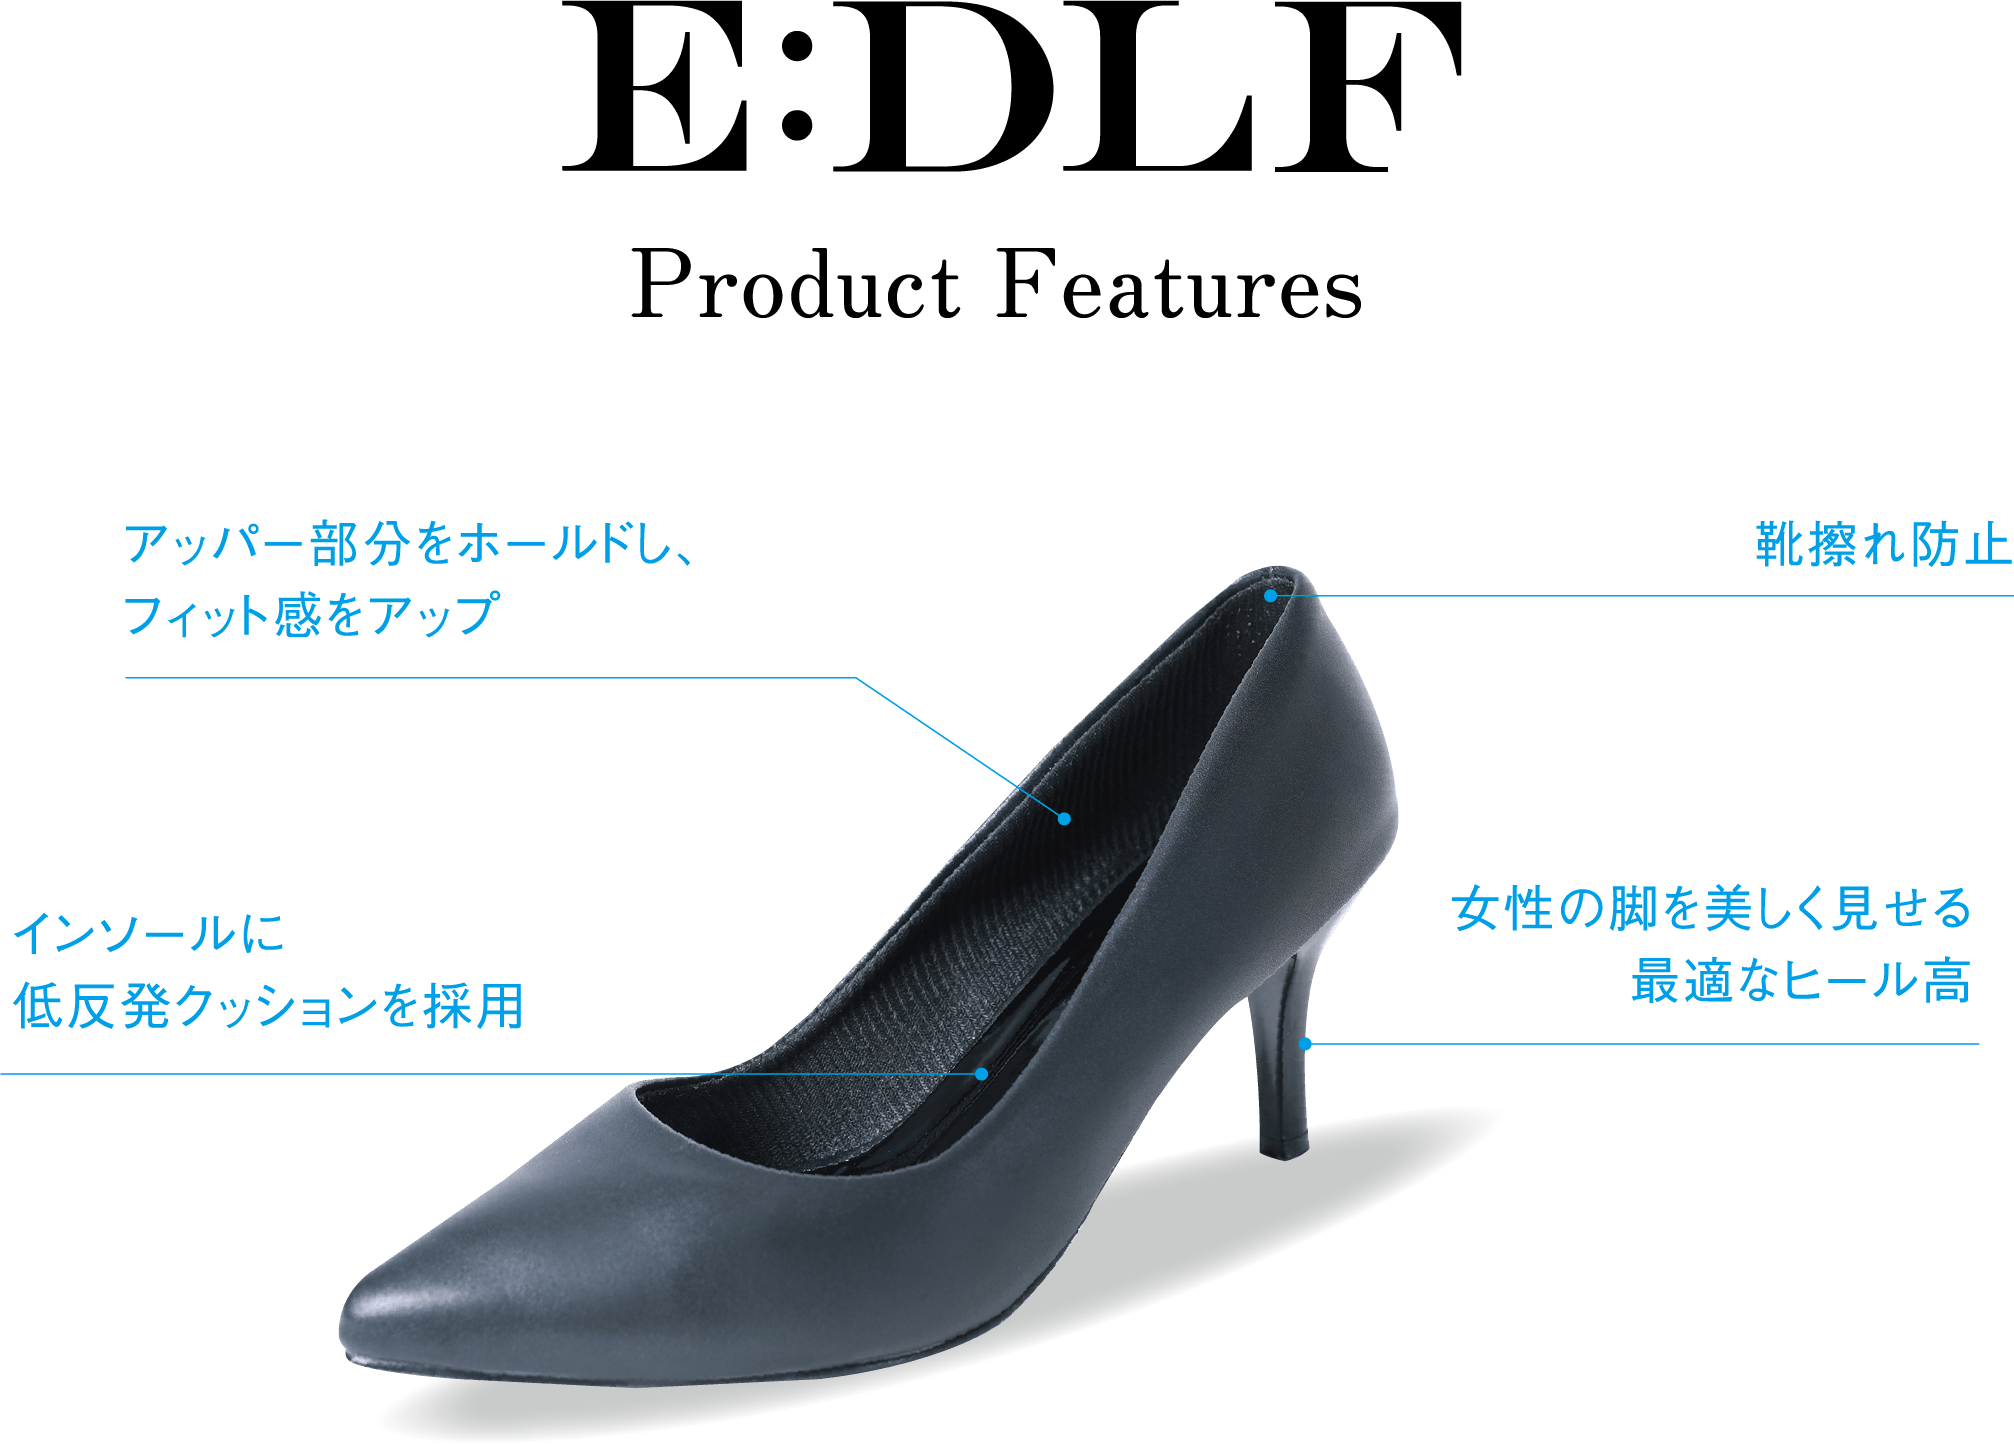 E:DLF Product Features ・アッパー部分をホールドし、フィット感をアップ・インソールに低反発クッションを採用・靴擦れ防止・女性の脚を美しく見せる最適なヒール高